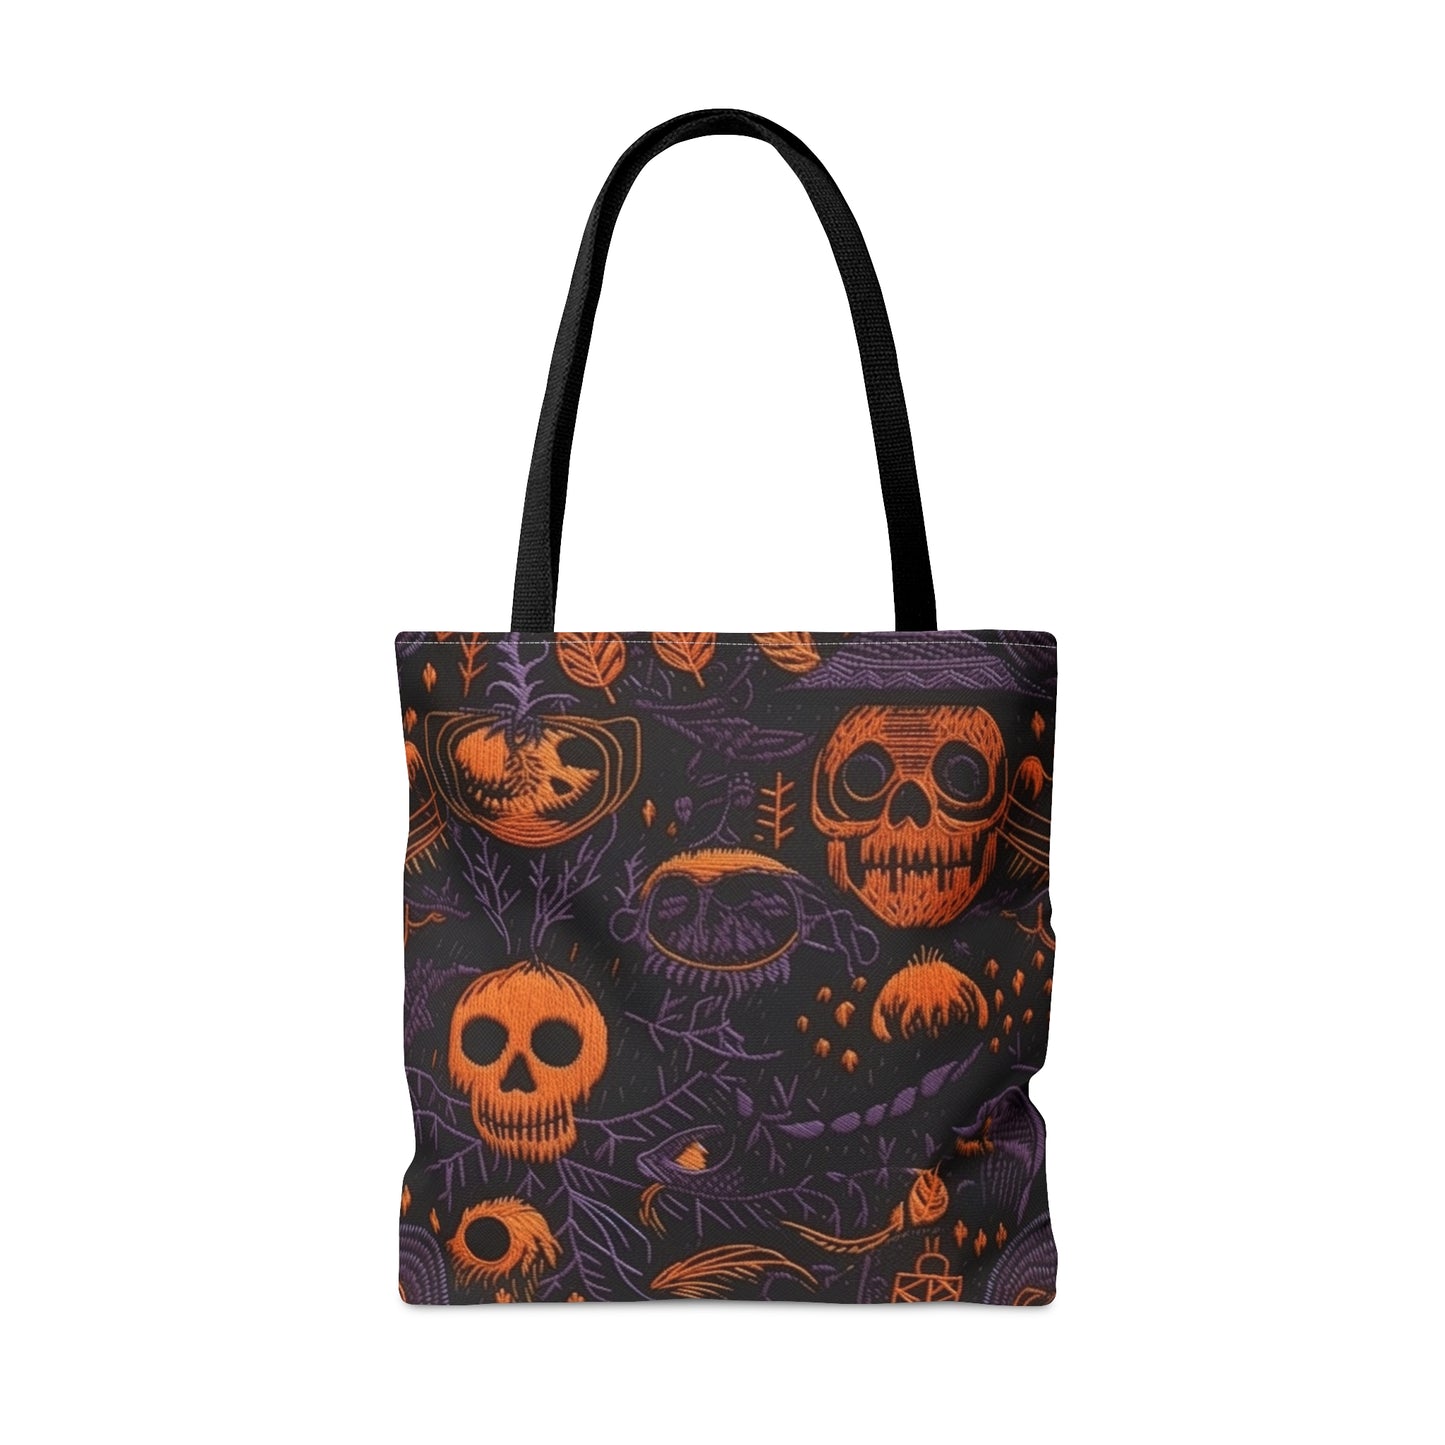 Embroidered Skull Black Purple Tote Bag (AOP)